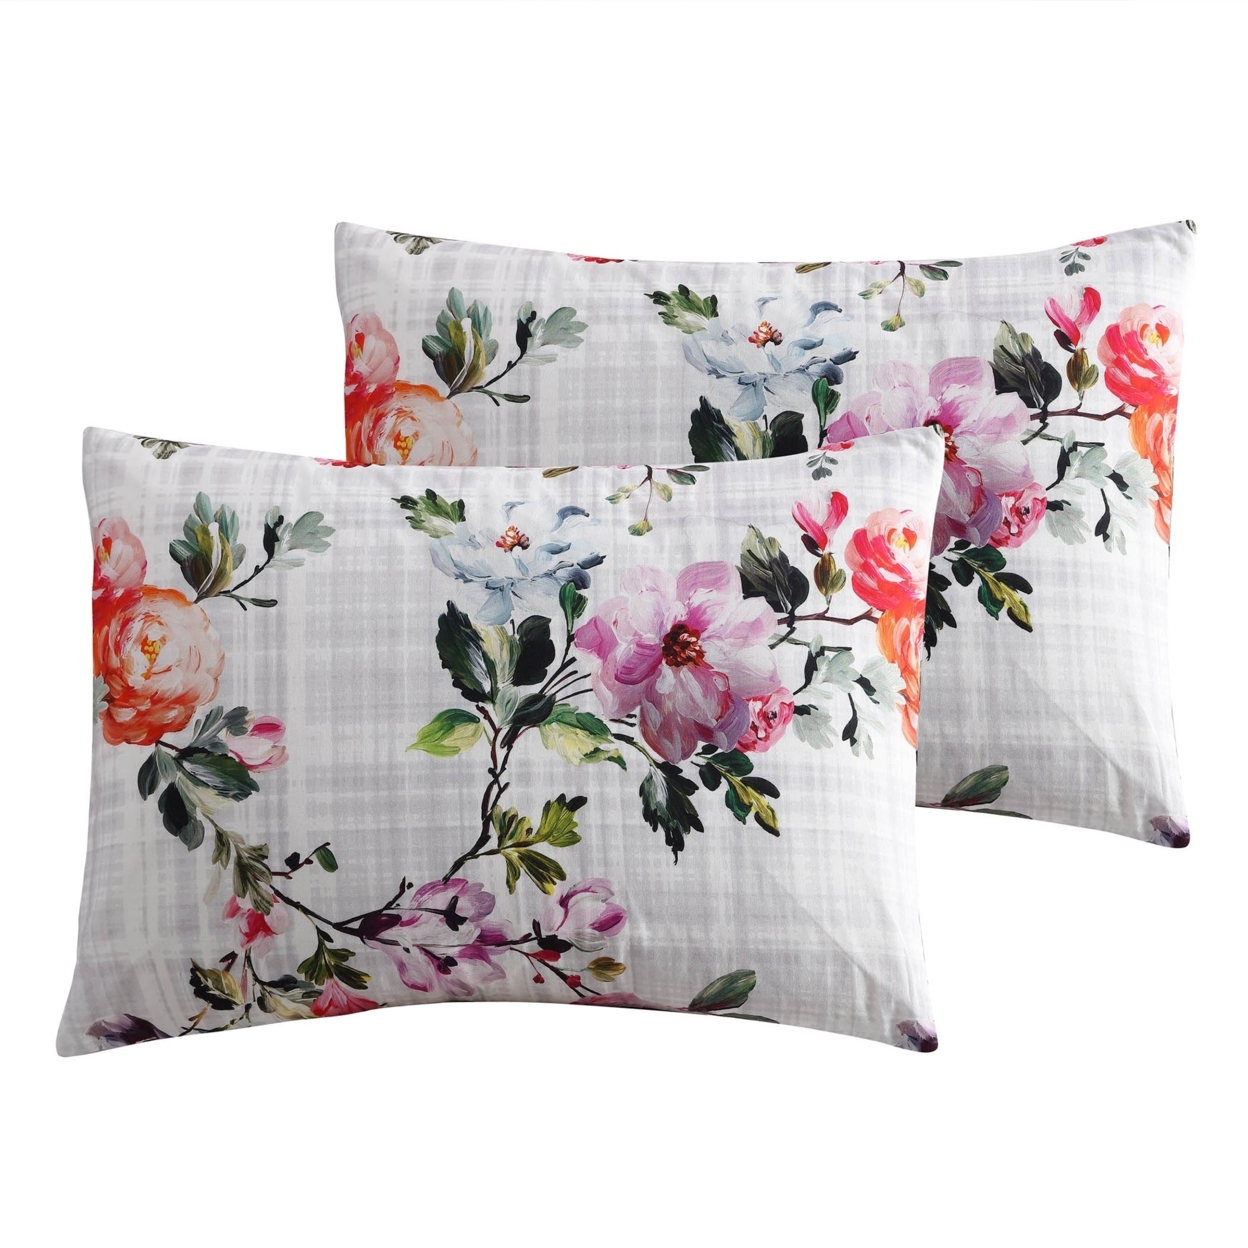 7 Piece King Comforter Set With Watercolor Floral Print, Multicolor- Saltoro Sherpi